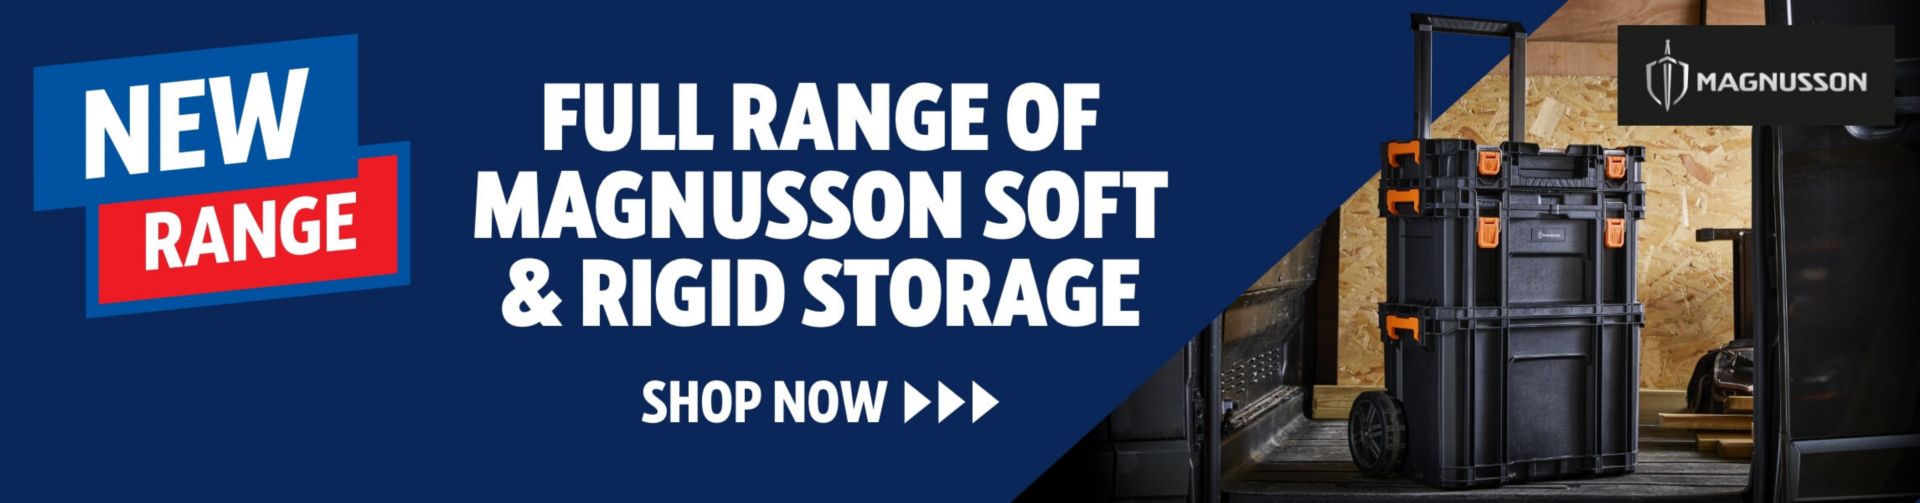 New Range of Magnusson Soft and Rigid Storage